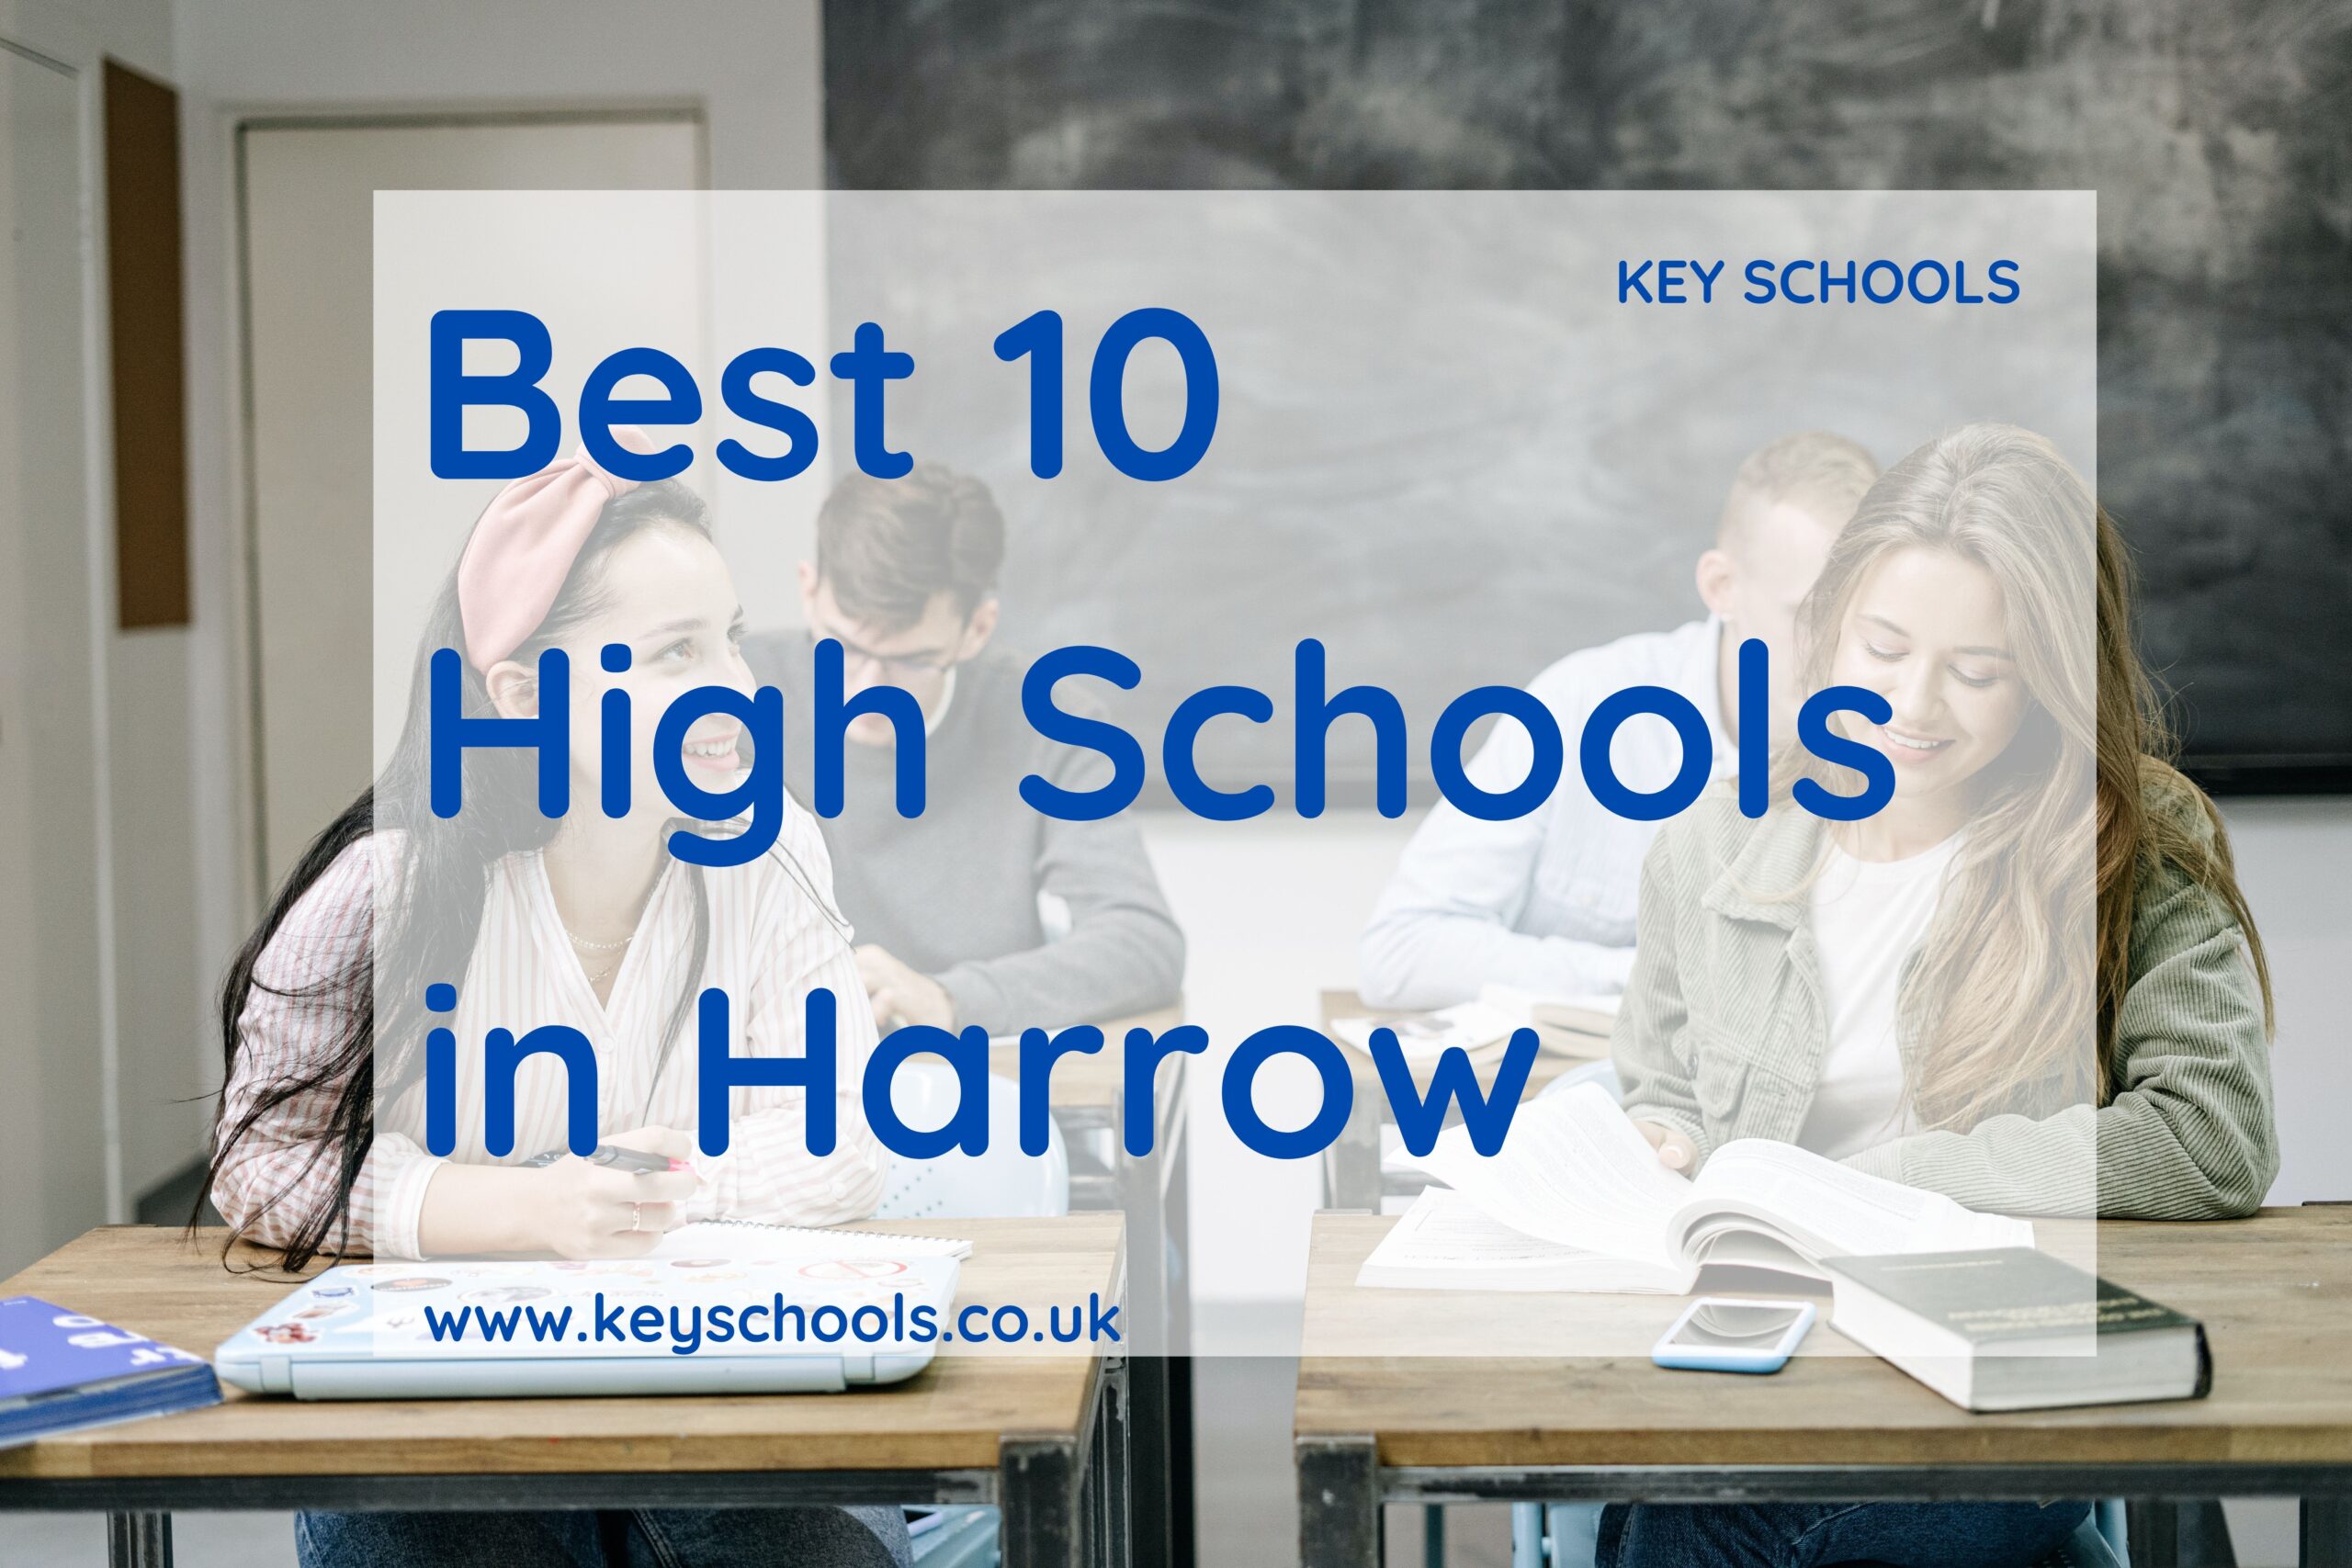 High Schools in Harrow